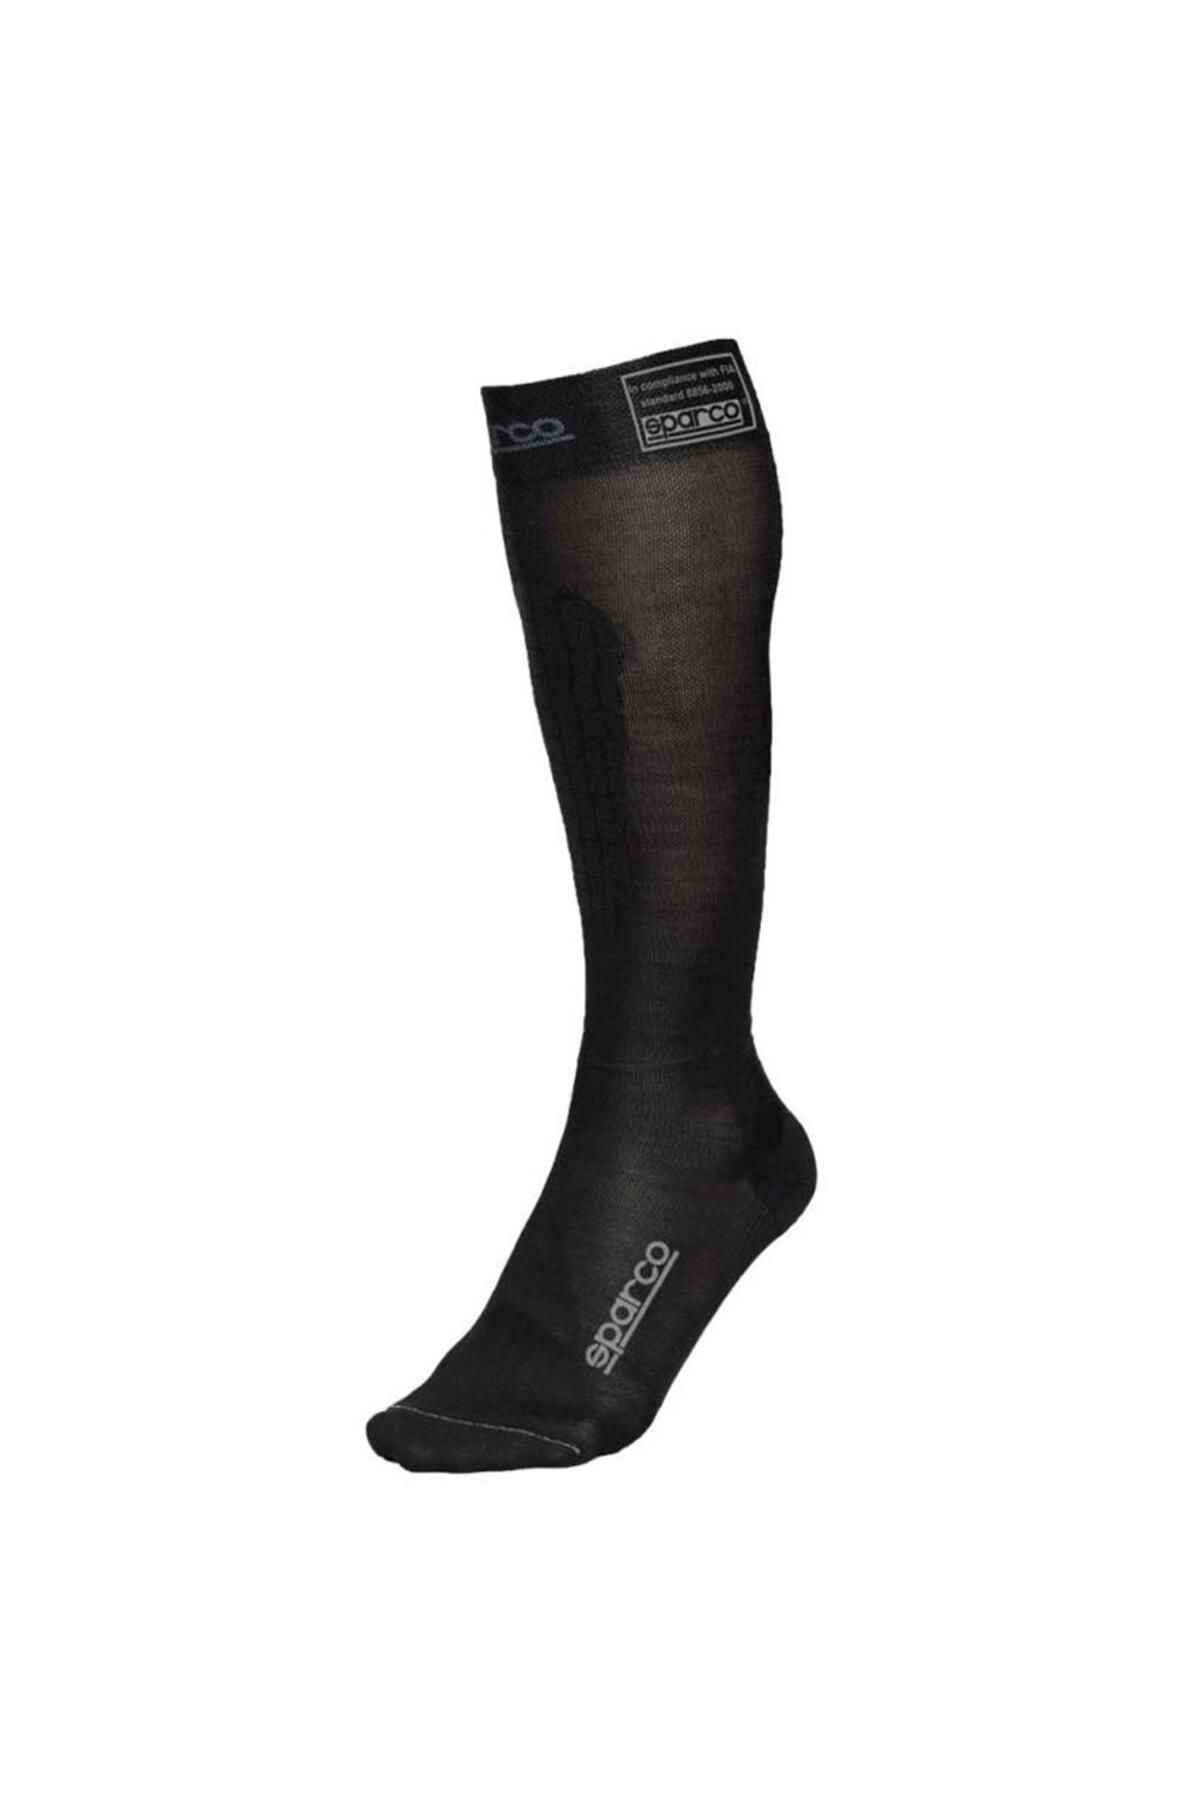 Sparco Rw-7 Çorap Fia Onaylı Siyah 40/41 Numara